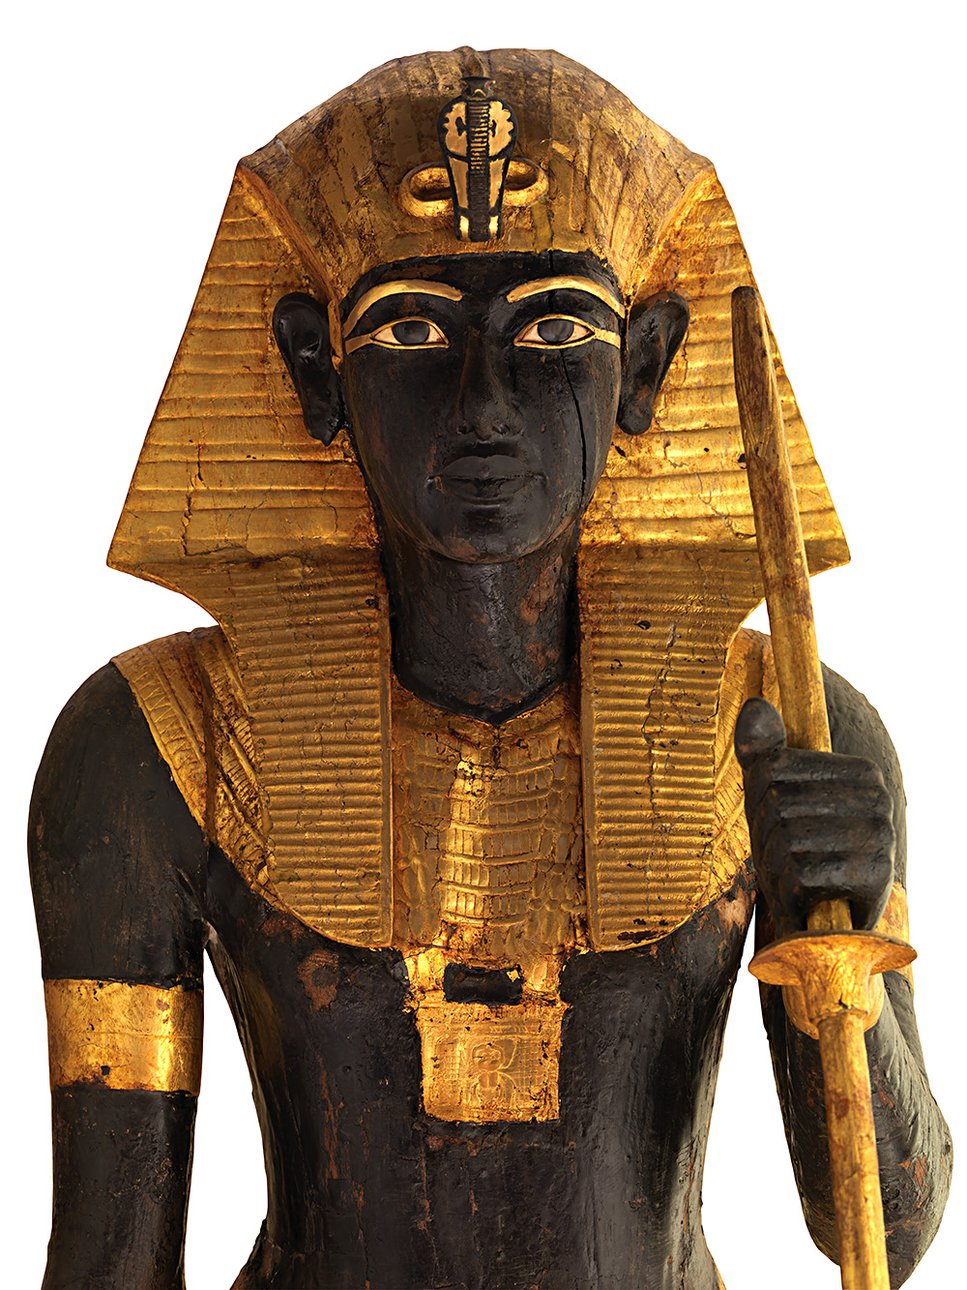 Деревянная статуя Короля-хранителя. XVIII династия, царствование Тутанхамона, 1336–1326 гг. до н.э. Фото: Luxor, Valley of the Kings, KV62, Antechamber